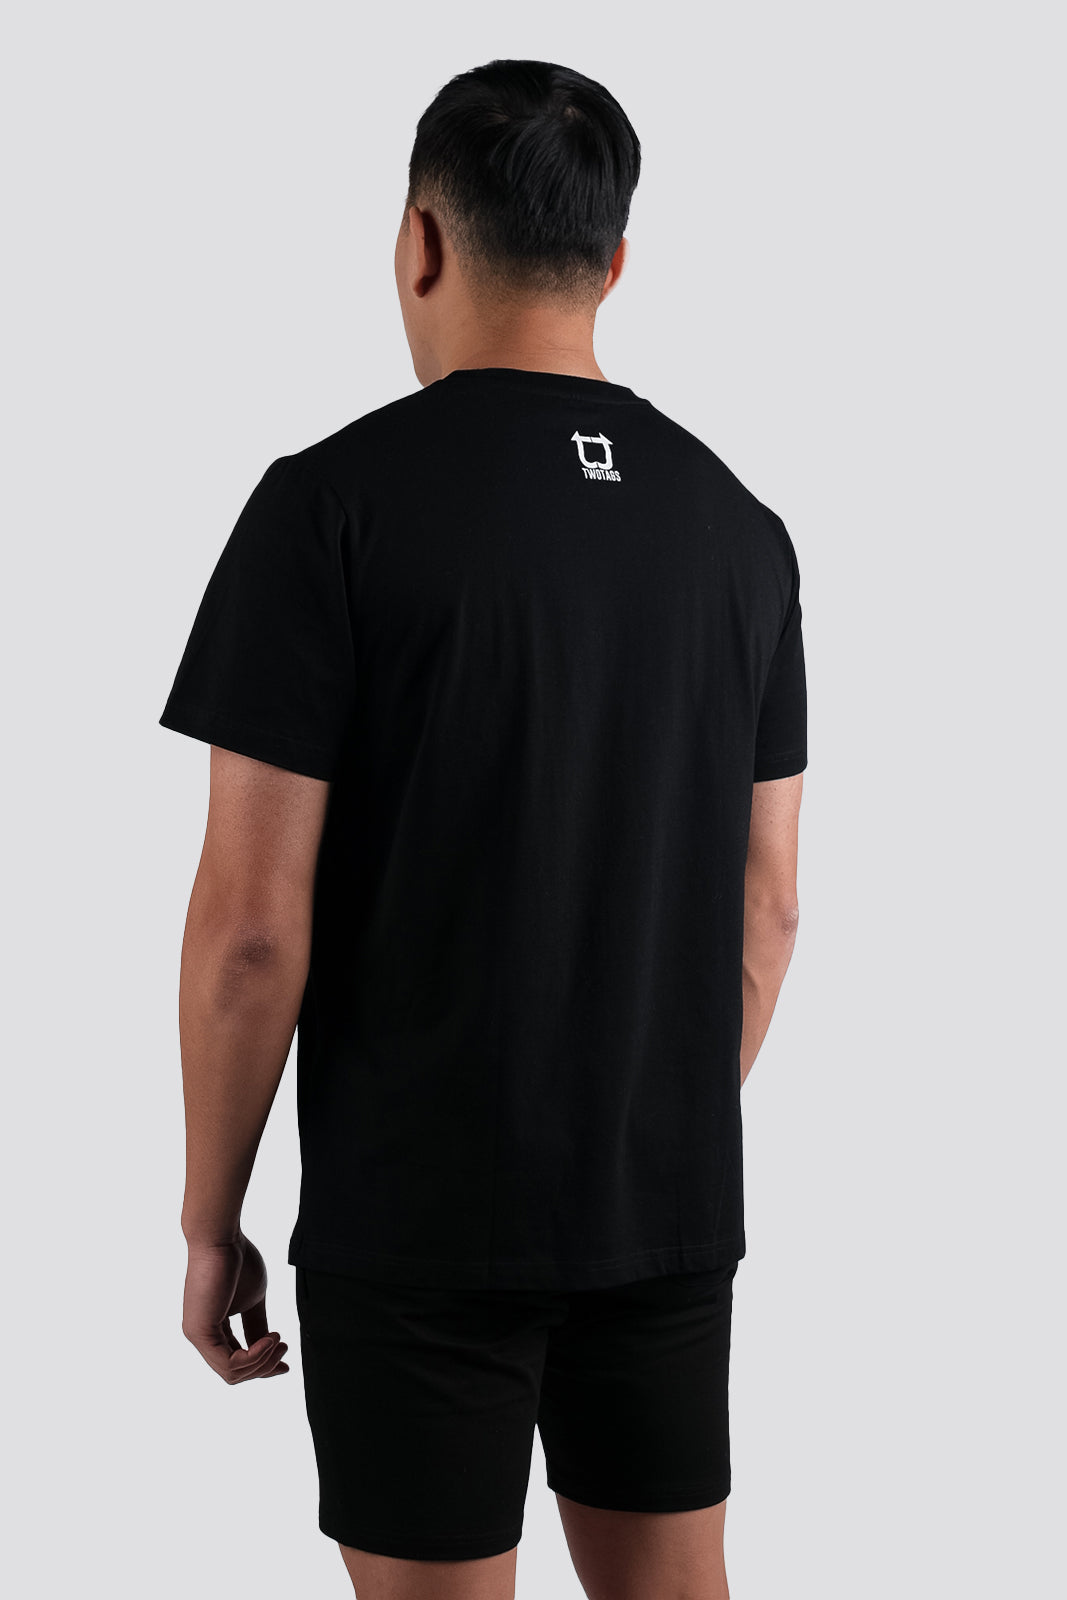 Infinite T-shirt - Black